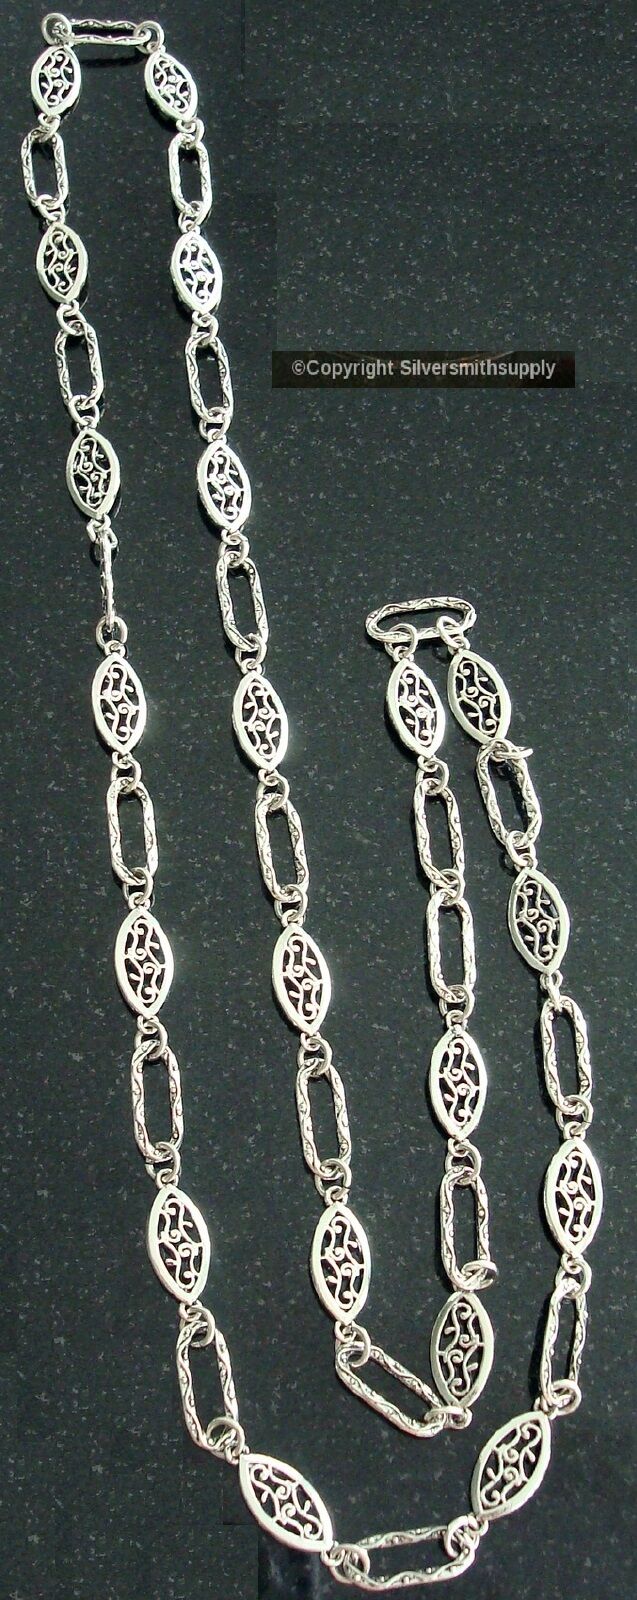 3' Sterling silver plated handmade filigree link jewelry chain ch119 Silversmithsupply